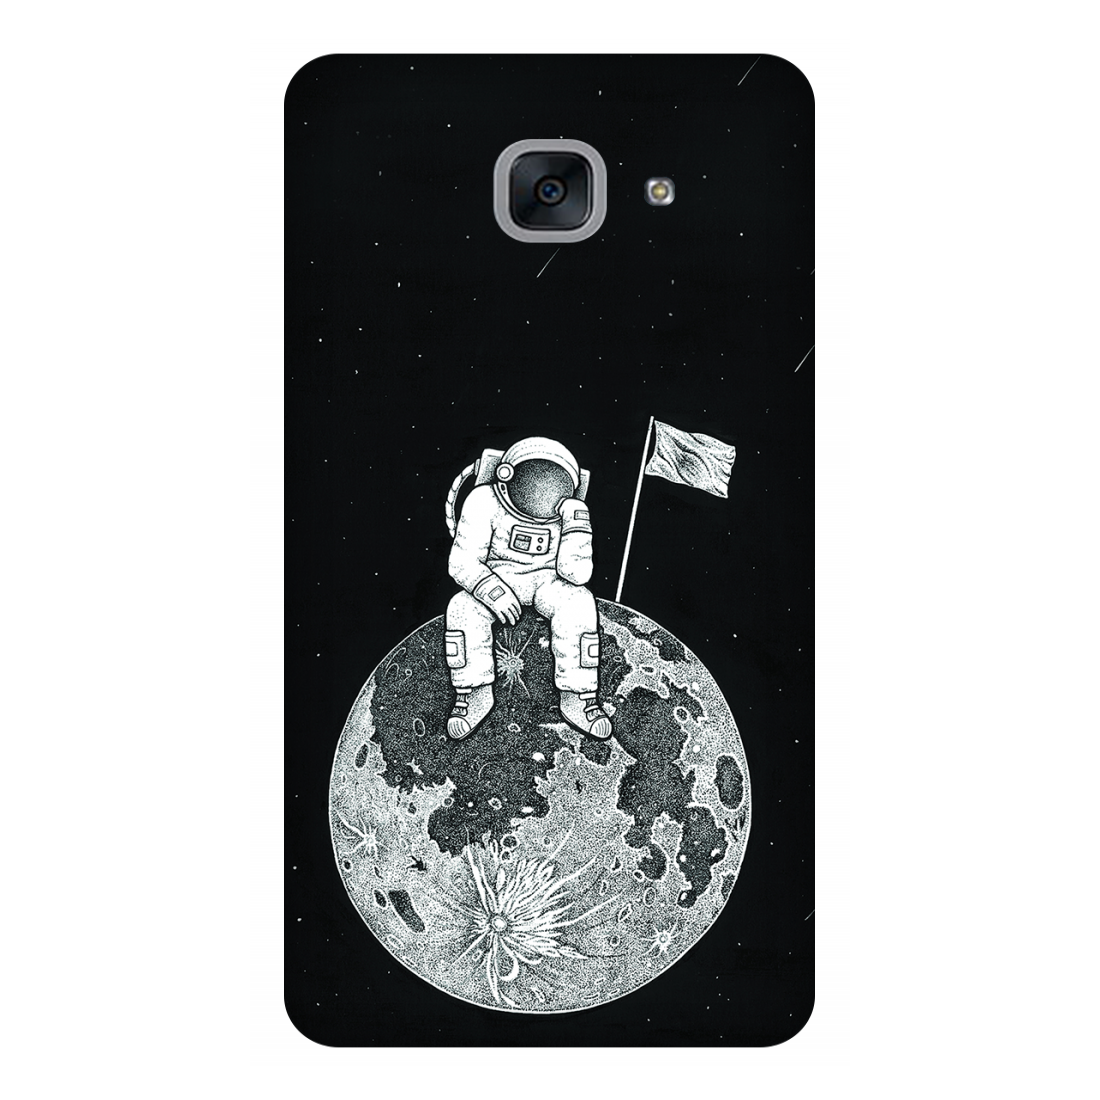 Astronaut on the Moon Case Samsung Galaxy J7 Max